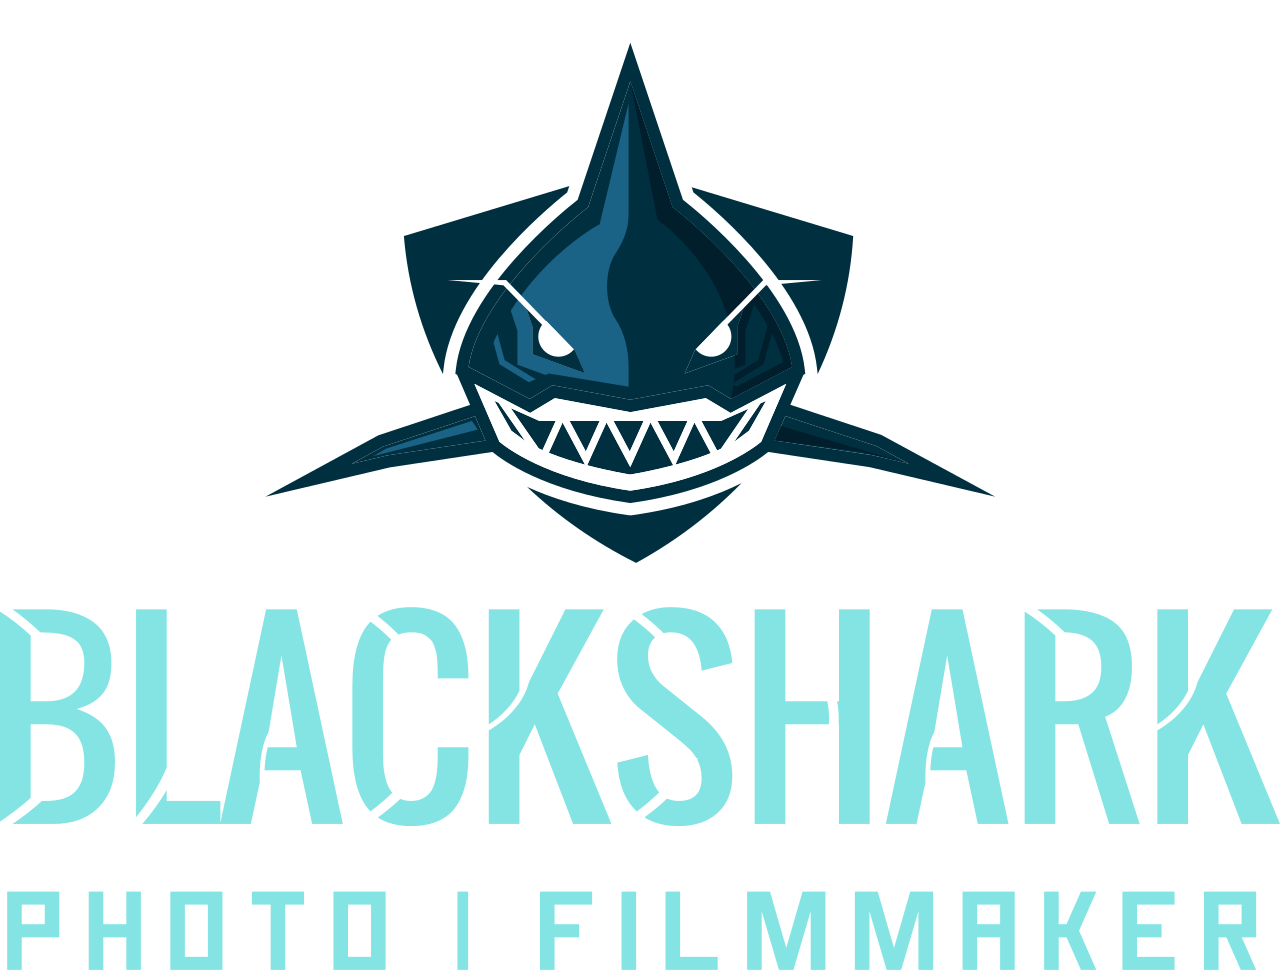 BLACKSHARK's web page